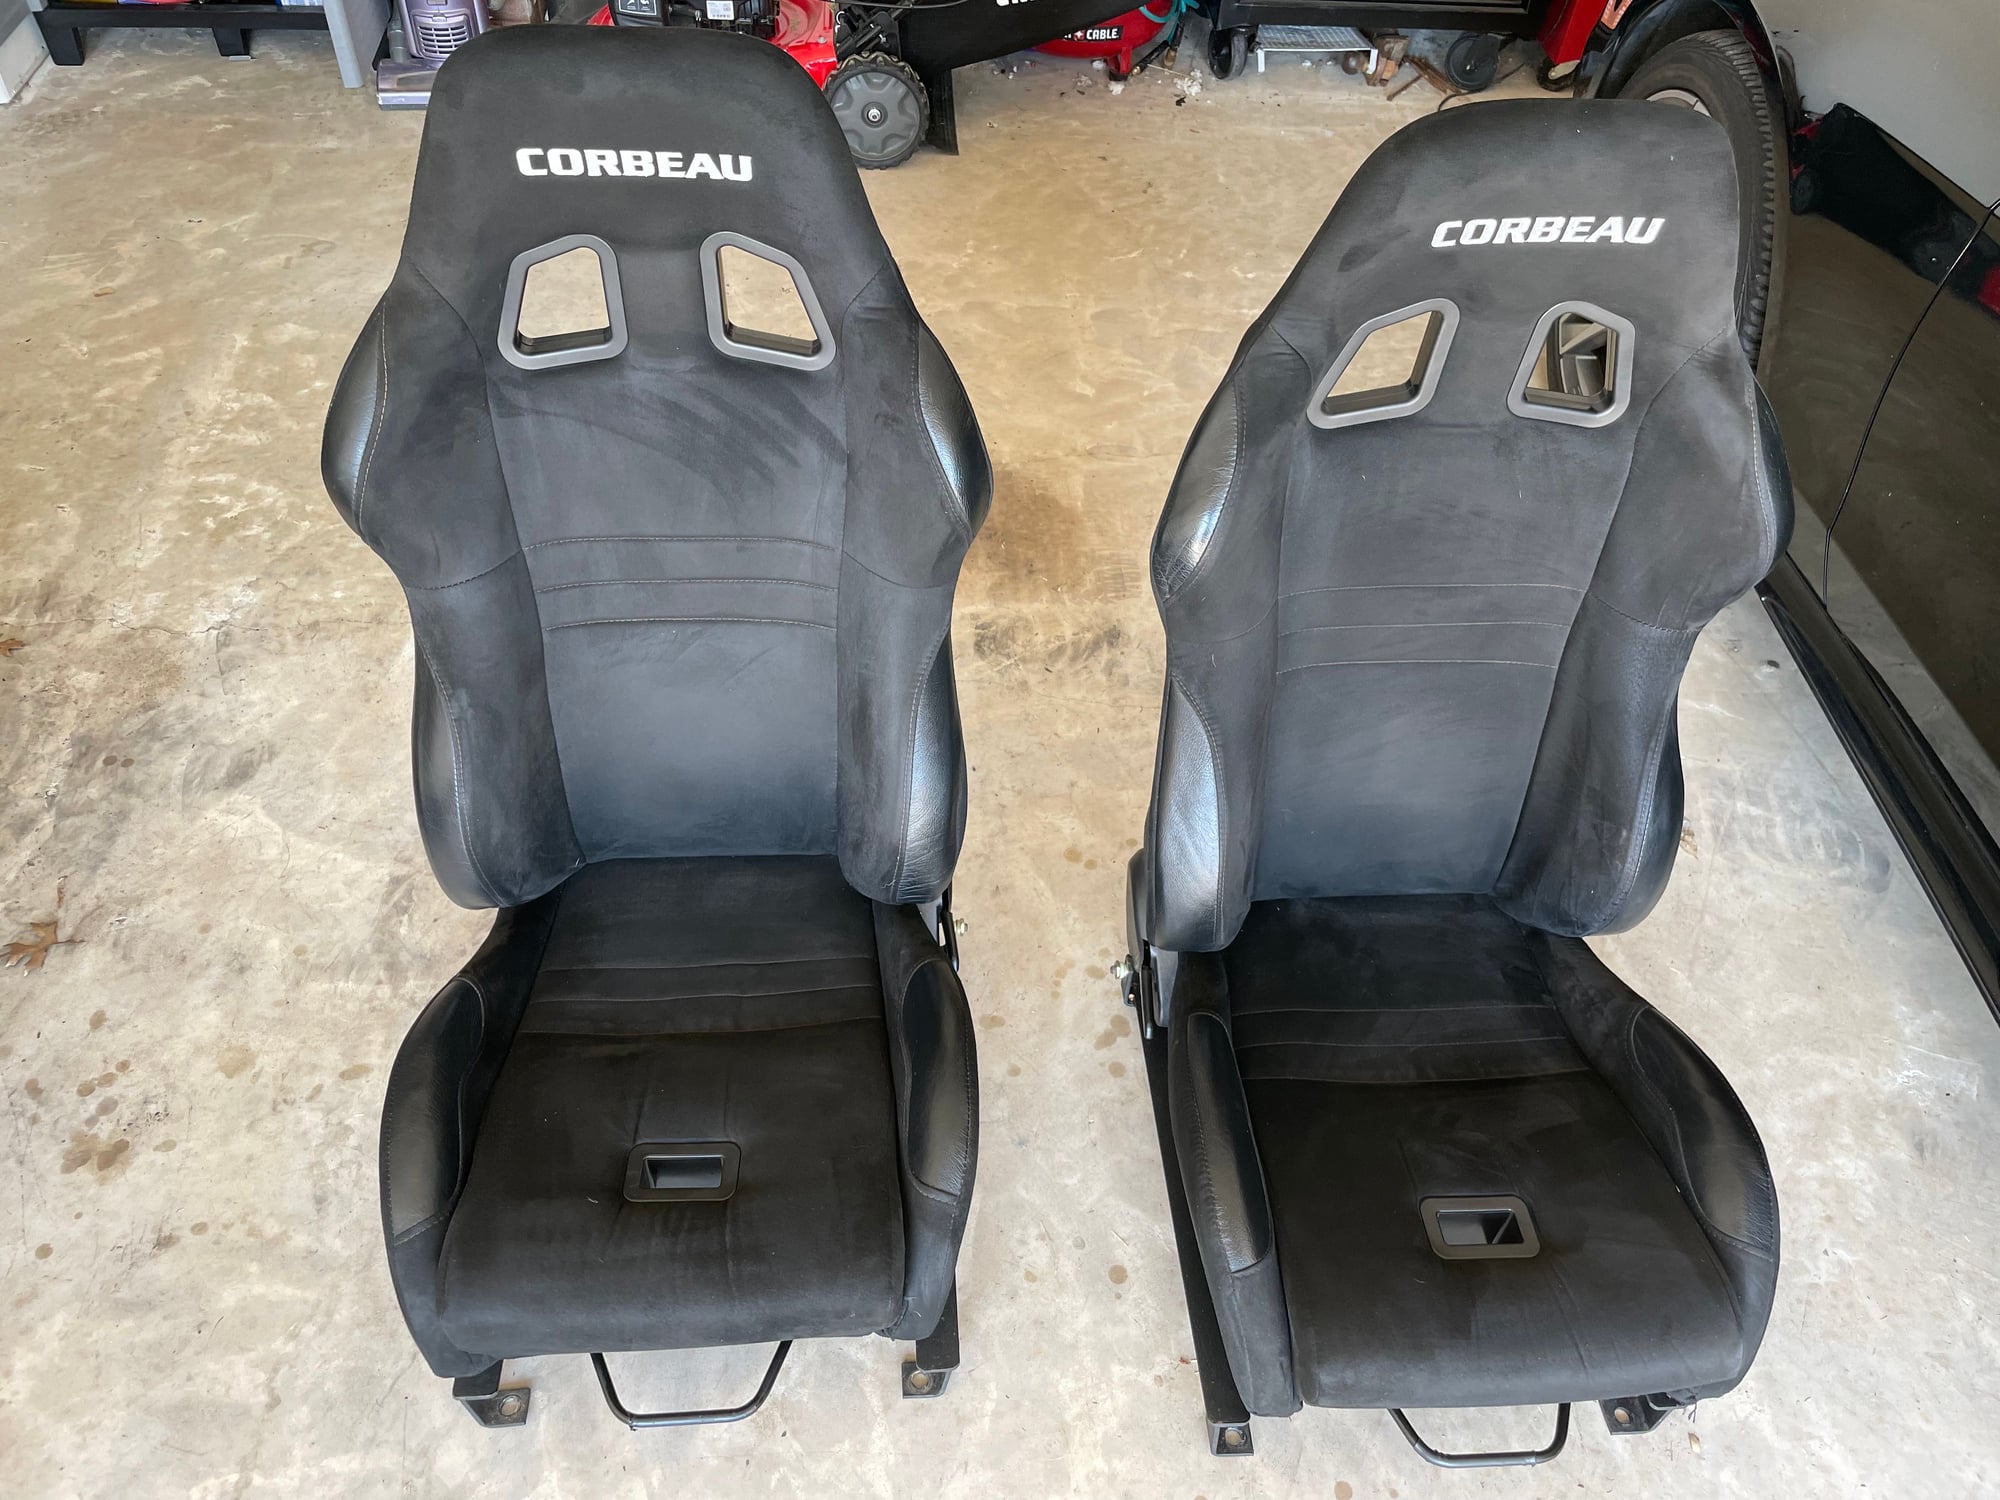 Accessories - Corbeau Seats w/ C5 Corvette Rails Reclining & Sliding - Used - 0  All Models - Dallas, TX 75252, United States